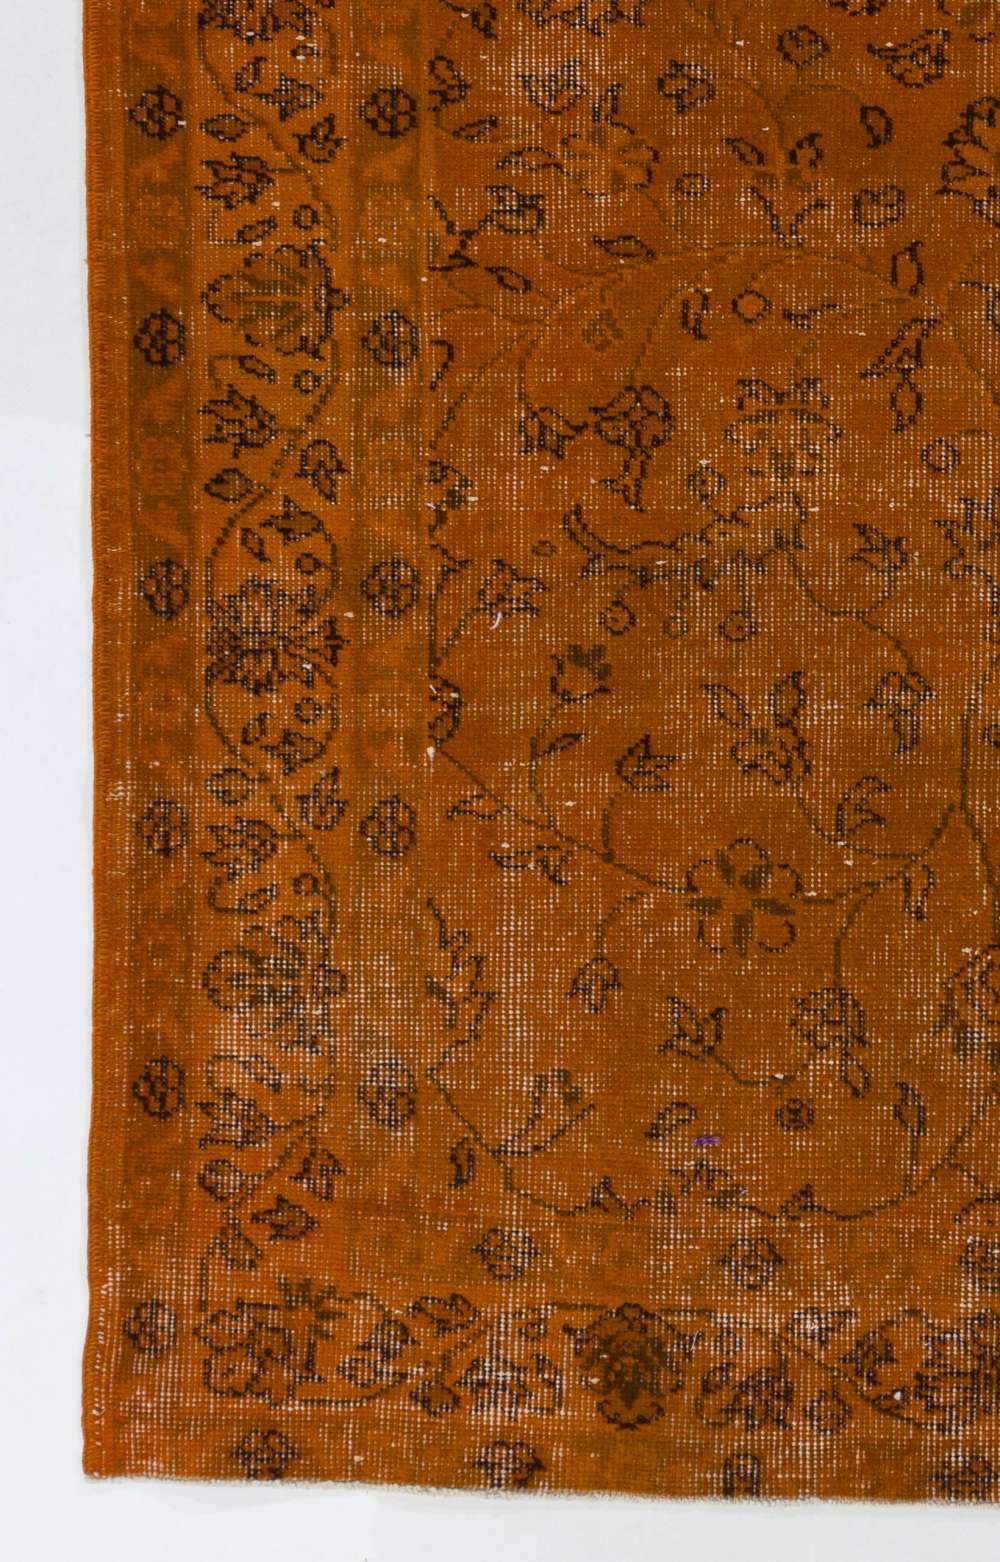 Hand-Woven Orange Color Overdyed Handmade Vintage Floral Turkish Rug